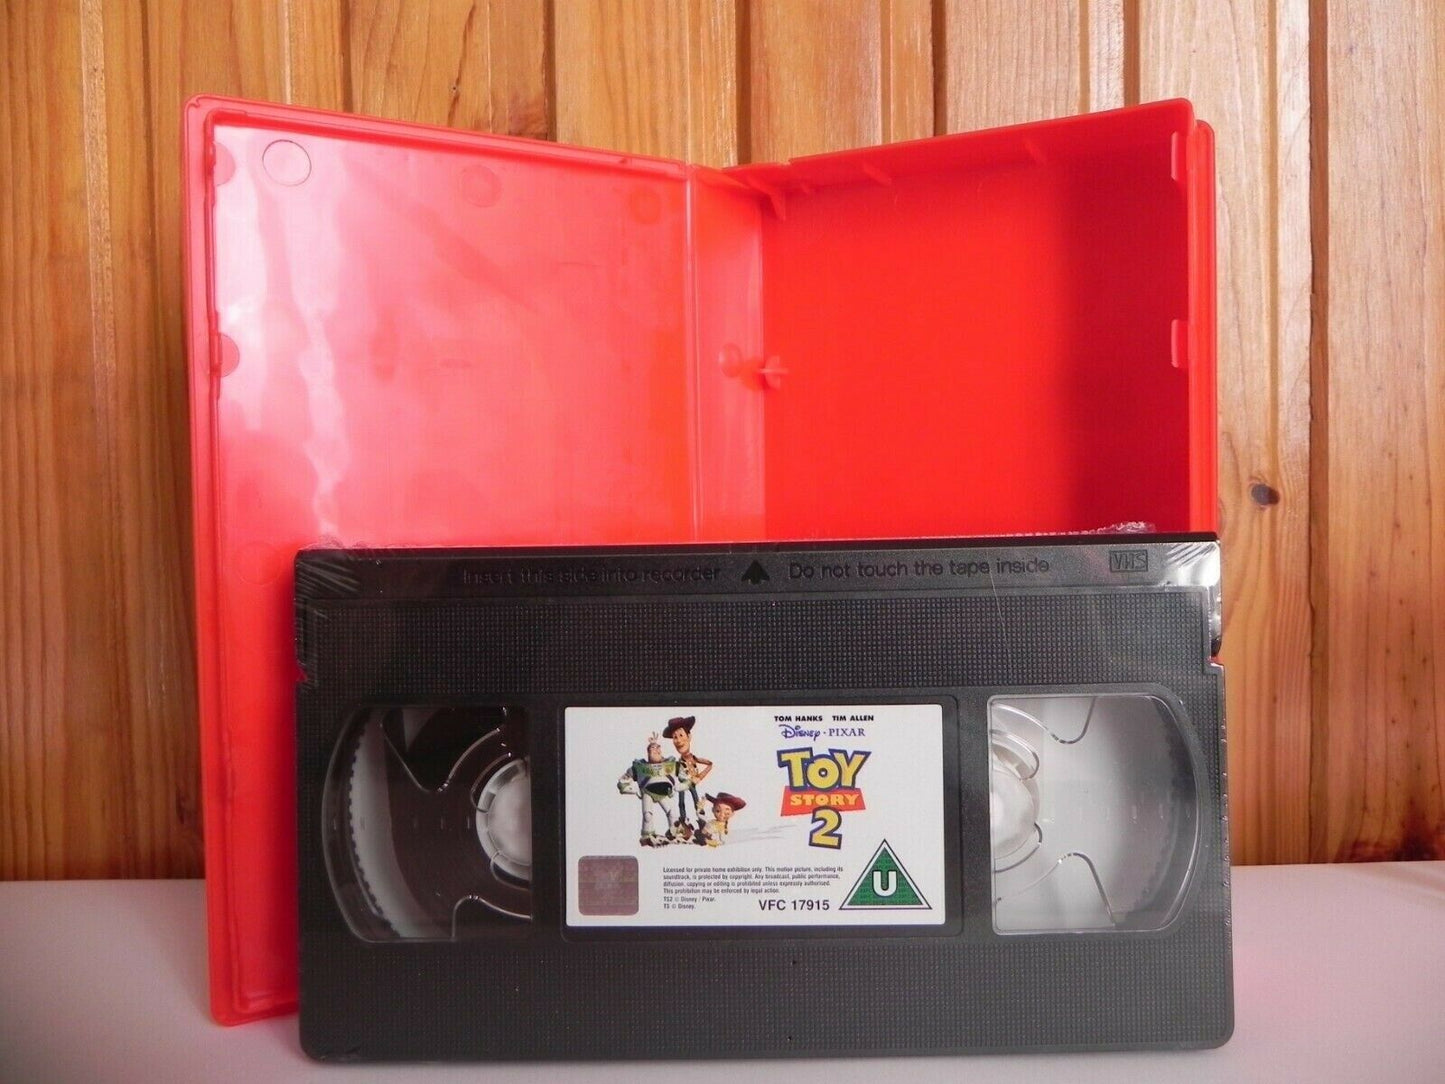 Toy Story 2: (1999) Walt Disney - Pixar - Brand New Sealed - Adventure - Pal VHS-